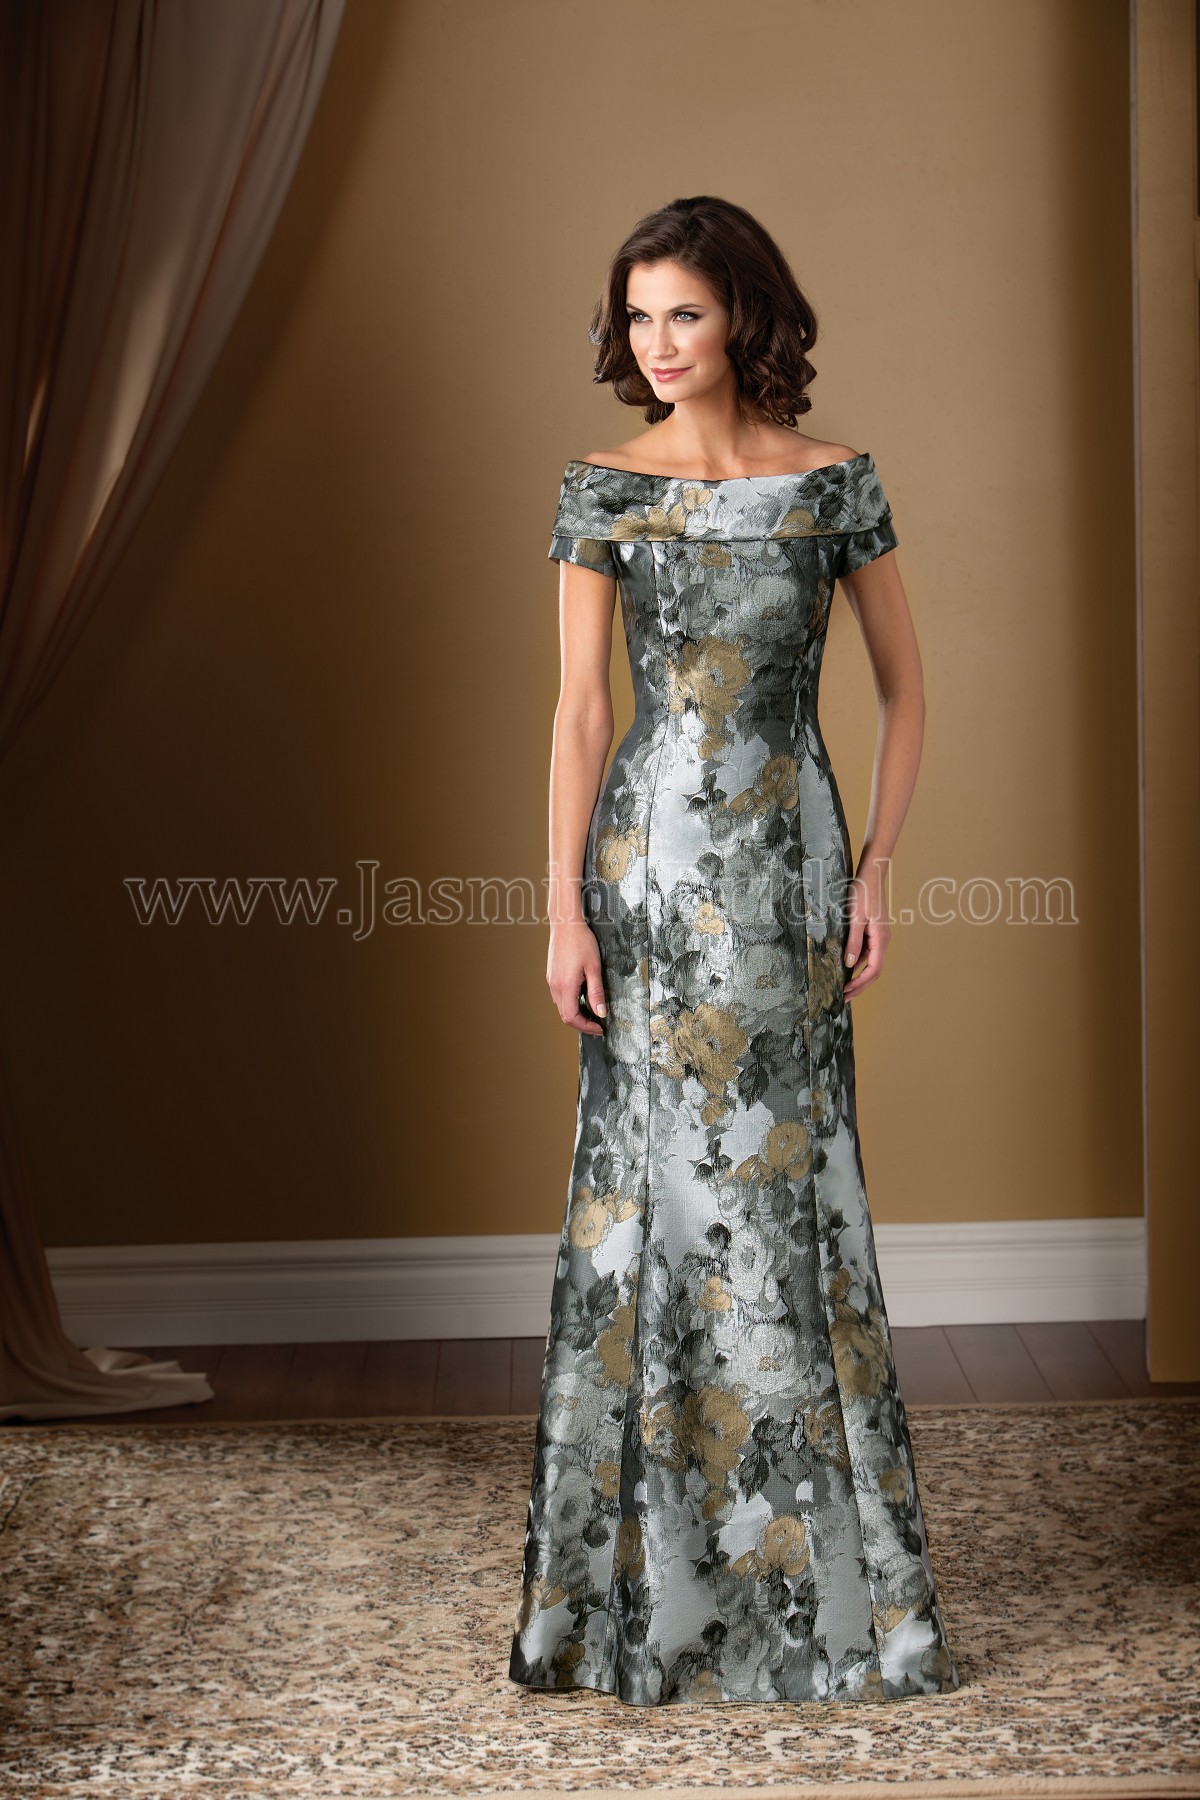 dress-jade-couture-spring-2015-k178016-jasmine-mother-of-the-bride